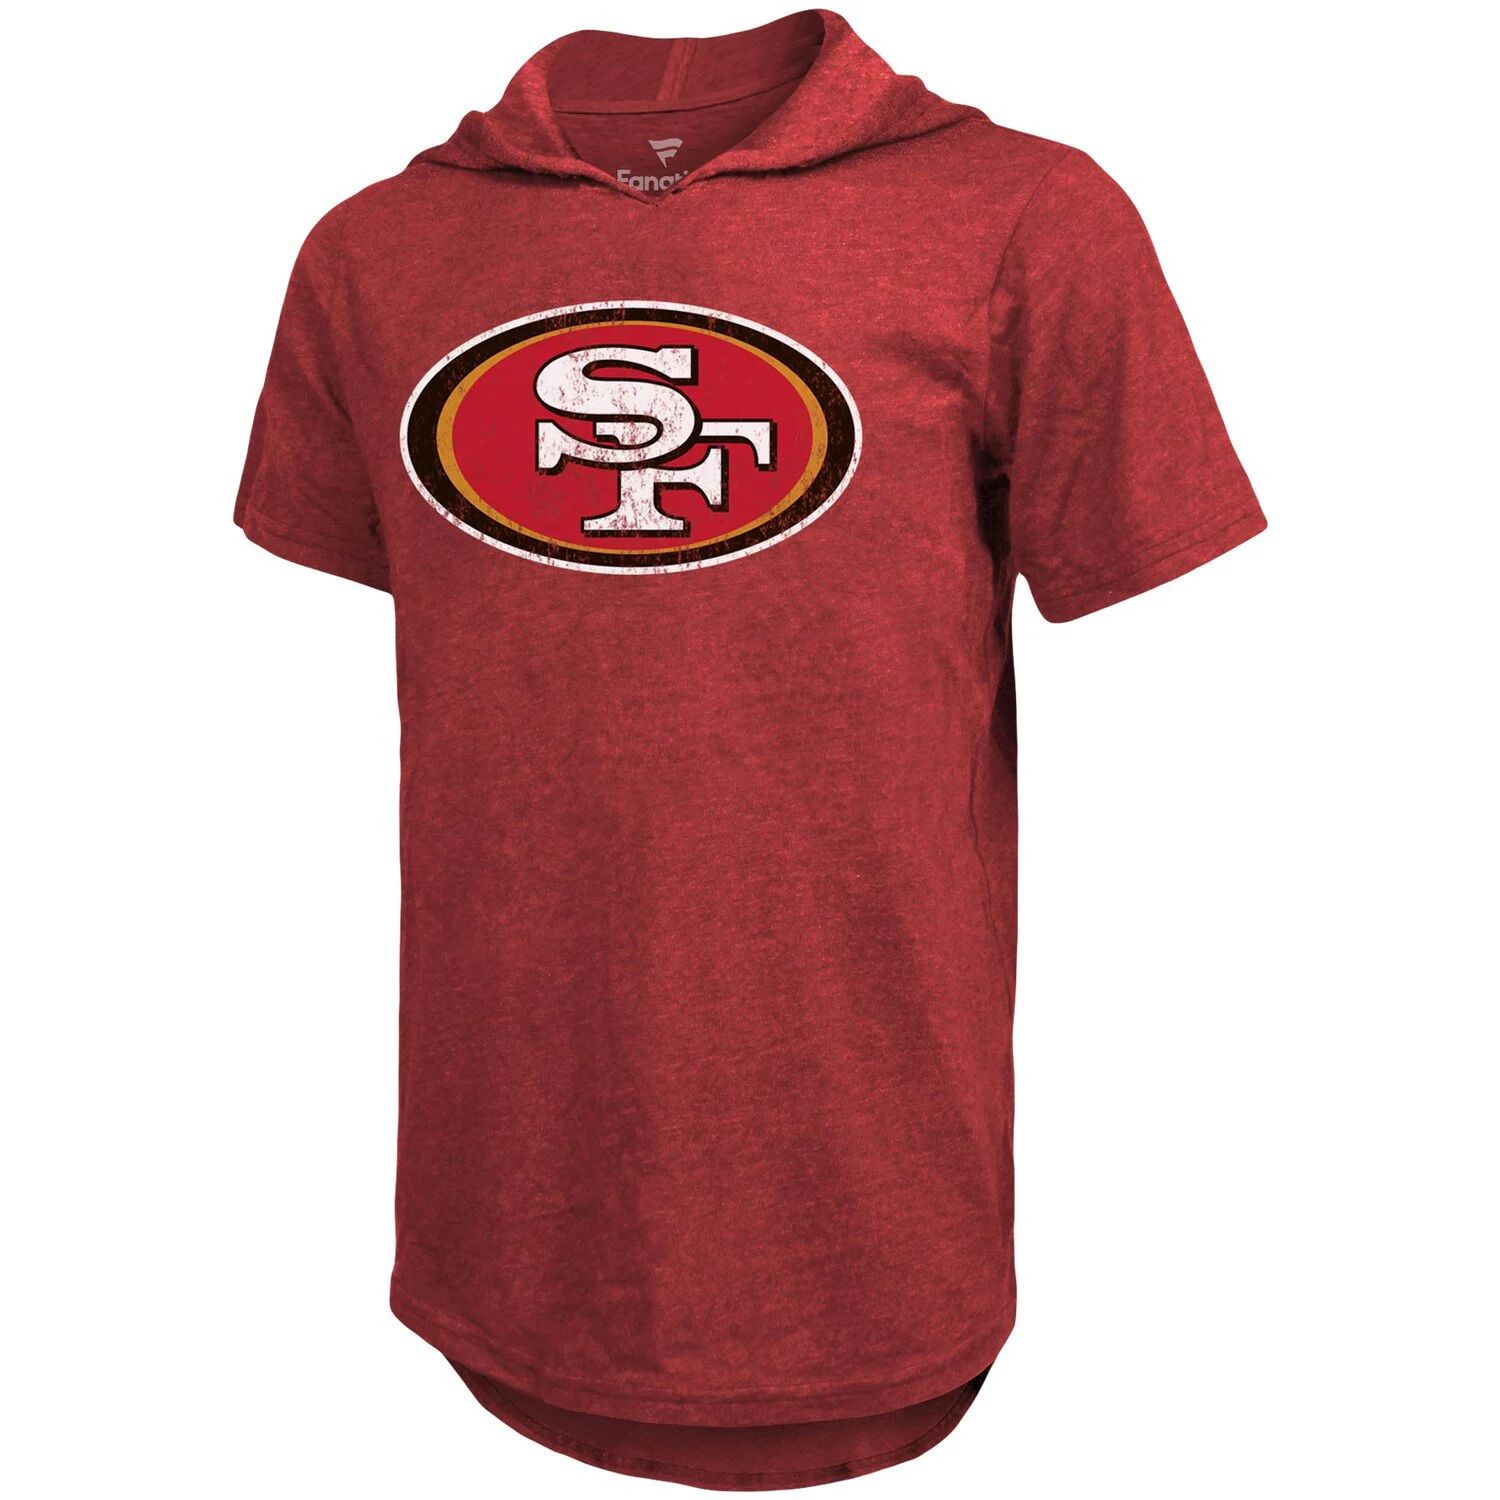 Мужская футболка с капюшоном Majestic Threads George Kittle Heathered Scarlet San Francisco 49ers, имя и номер, трехцветная футболка